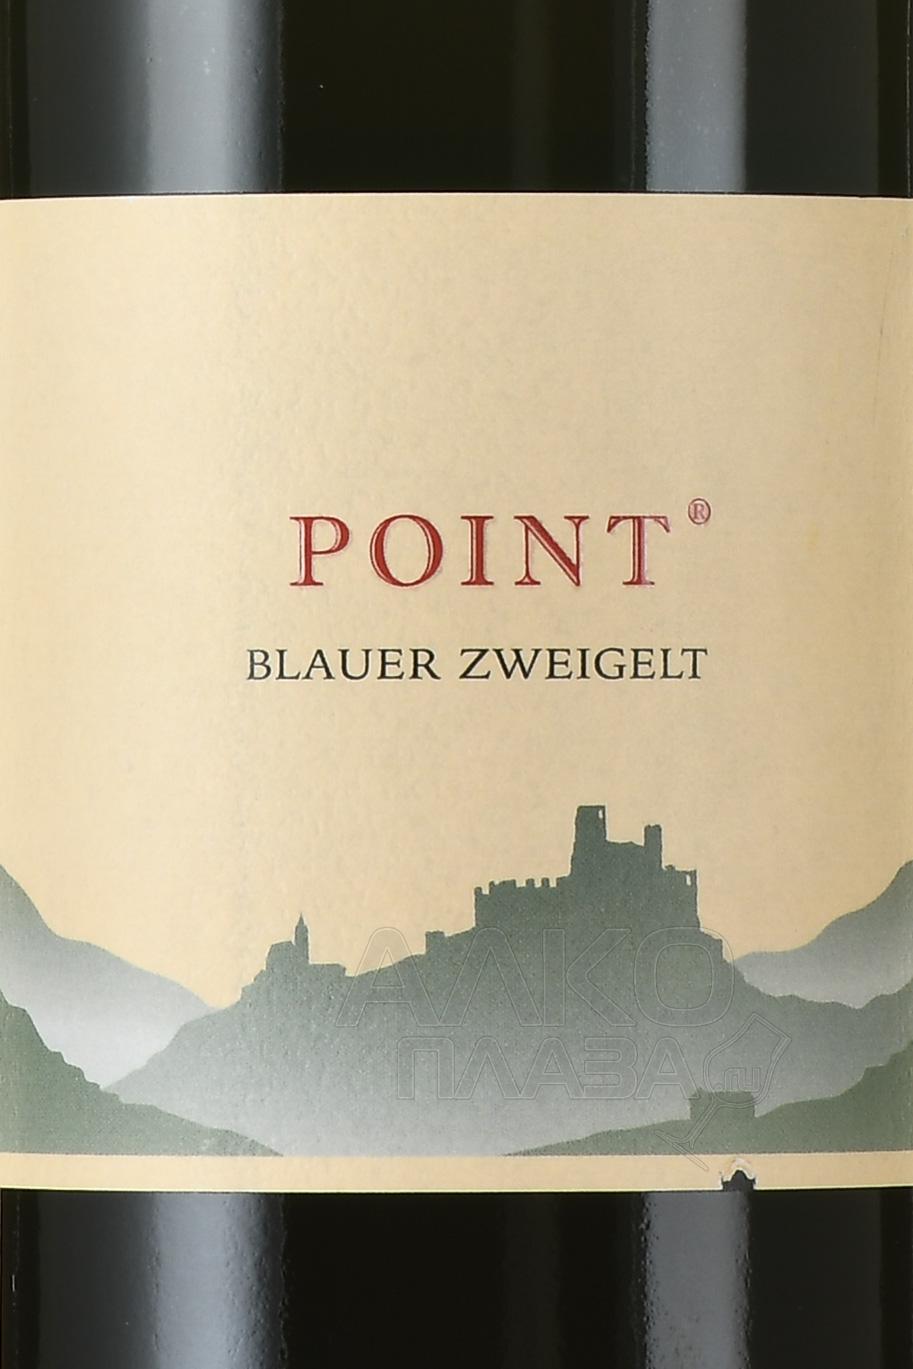 Blauer Zweigelt вино. Блауэр вино Цвайгельт красное. Австрийское вино Цвайгельт. Zweigelt вино красное сухое. Вин поинт